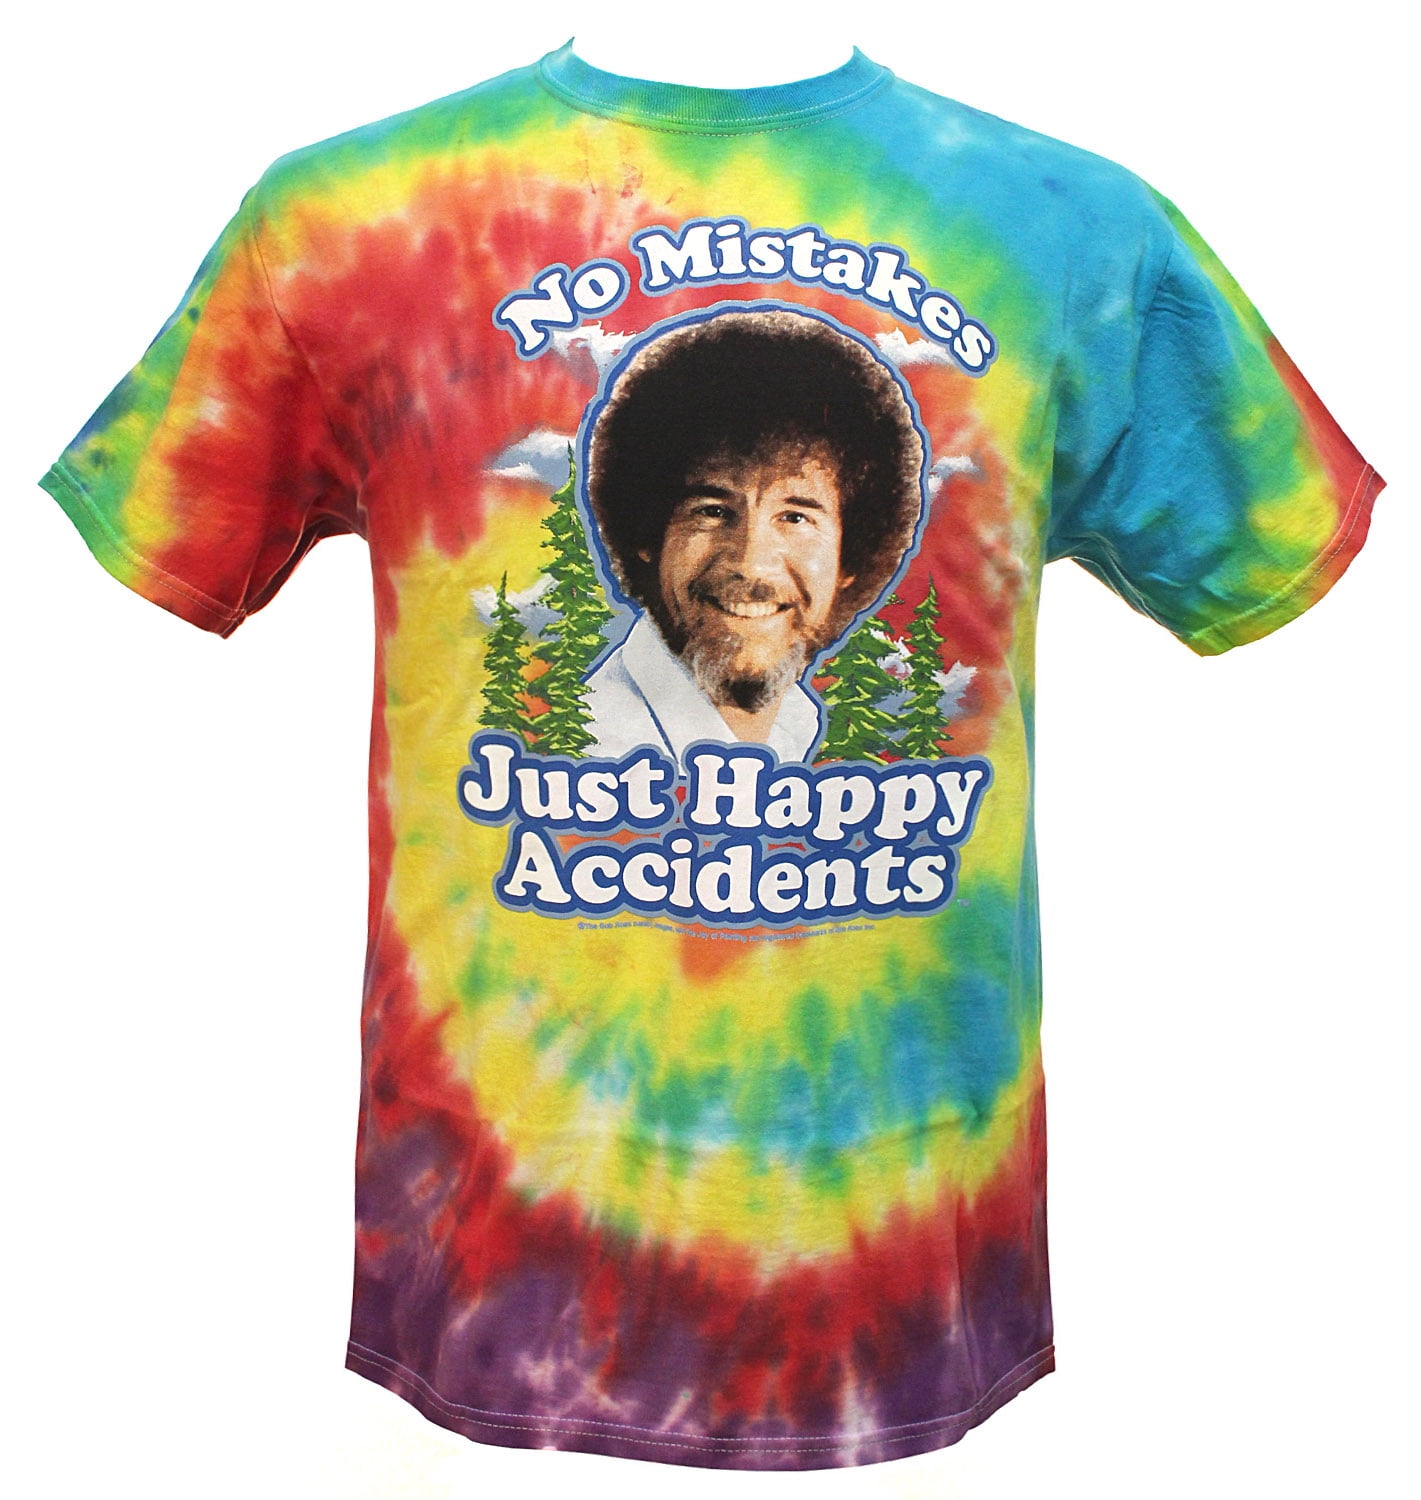 Bob is happy. Bob Ross Happy accidents. Счастливый человек в футболке. Несчастный случай футболка. Ross in a t Shirt.